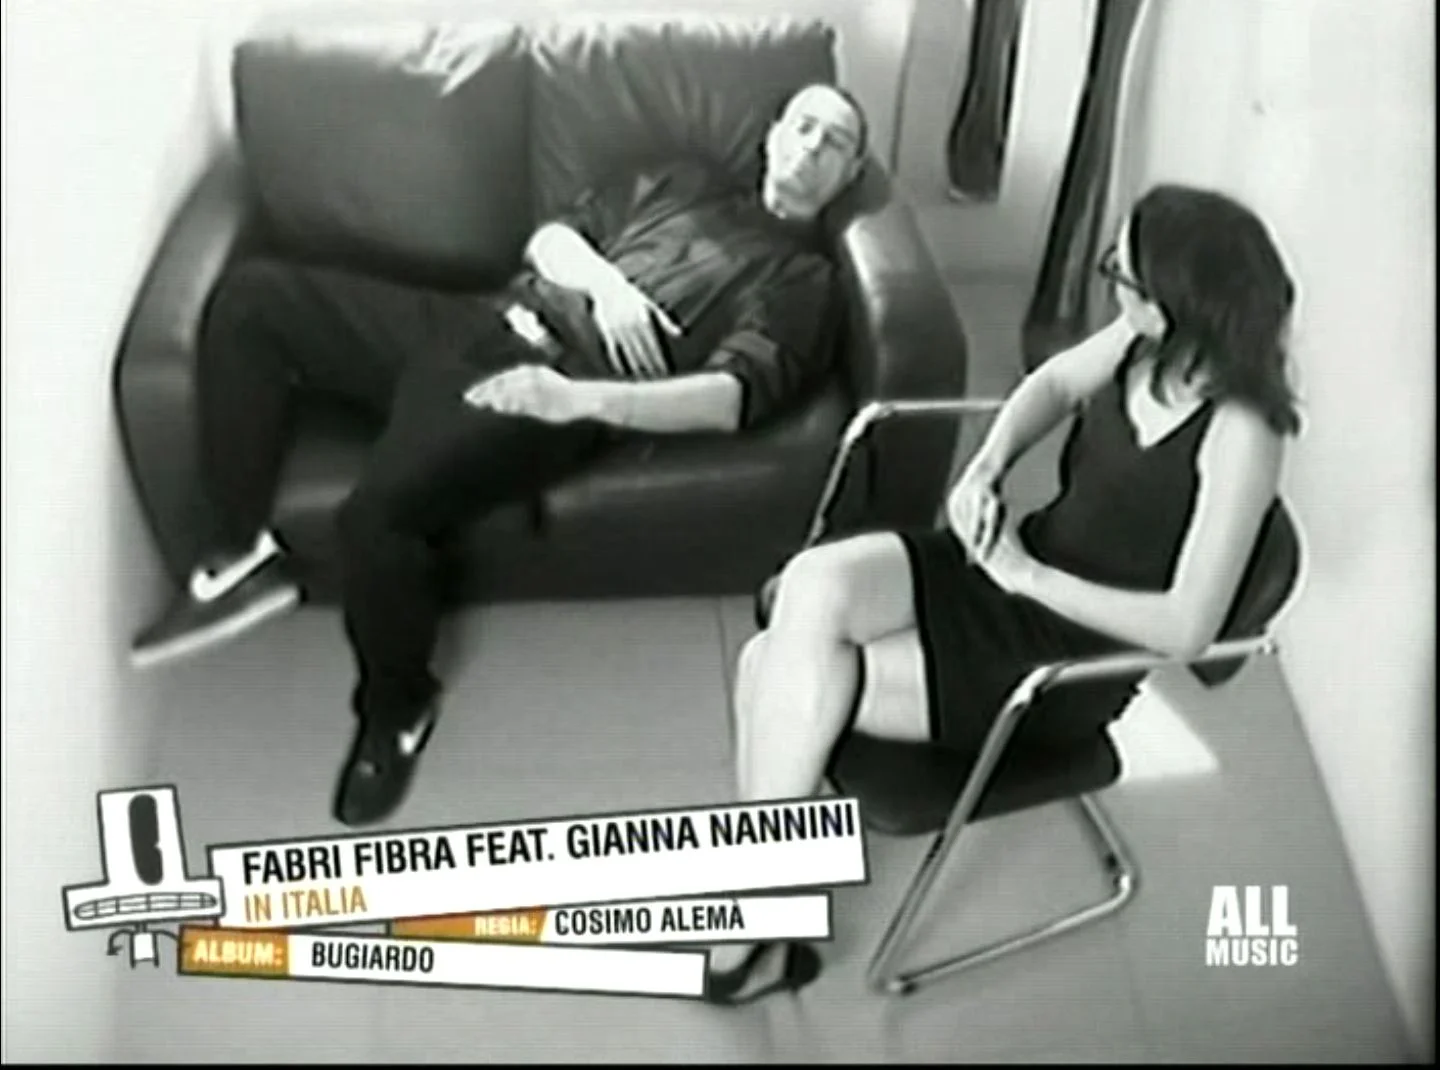 Fabri Fibra - Gianna Nannini - In Italia on Vimeo